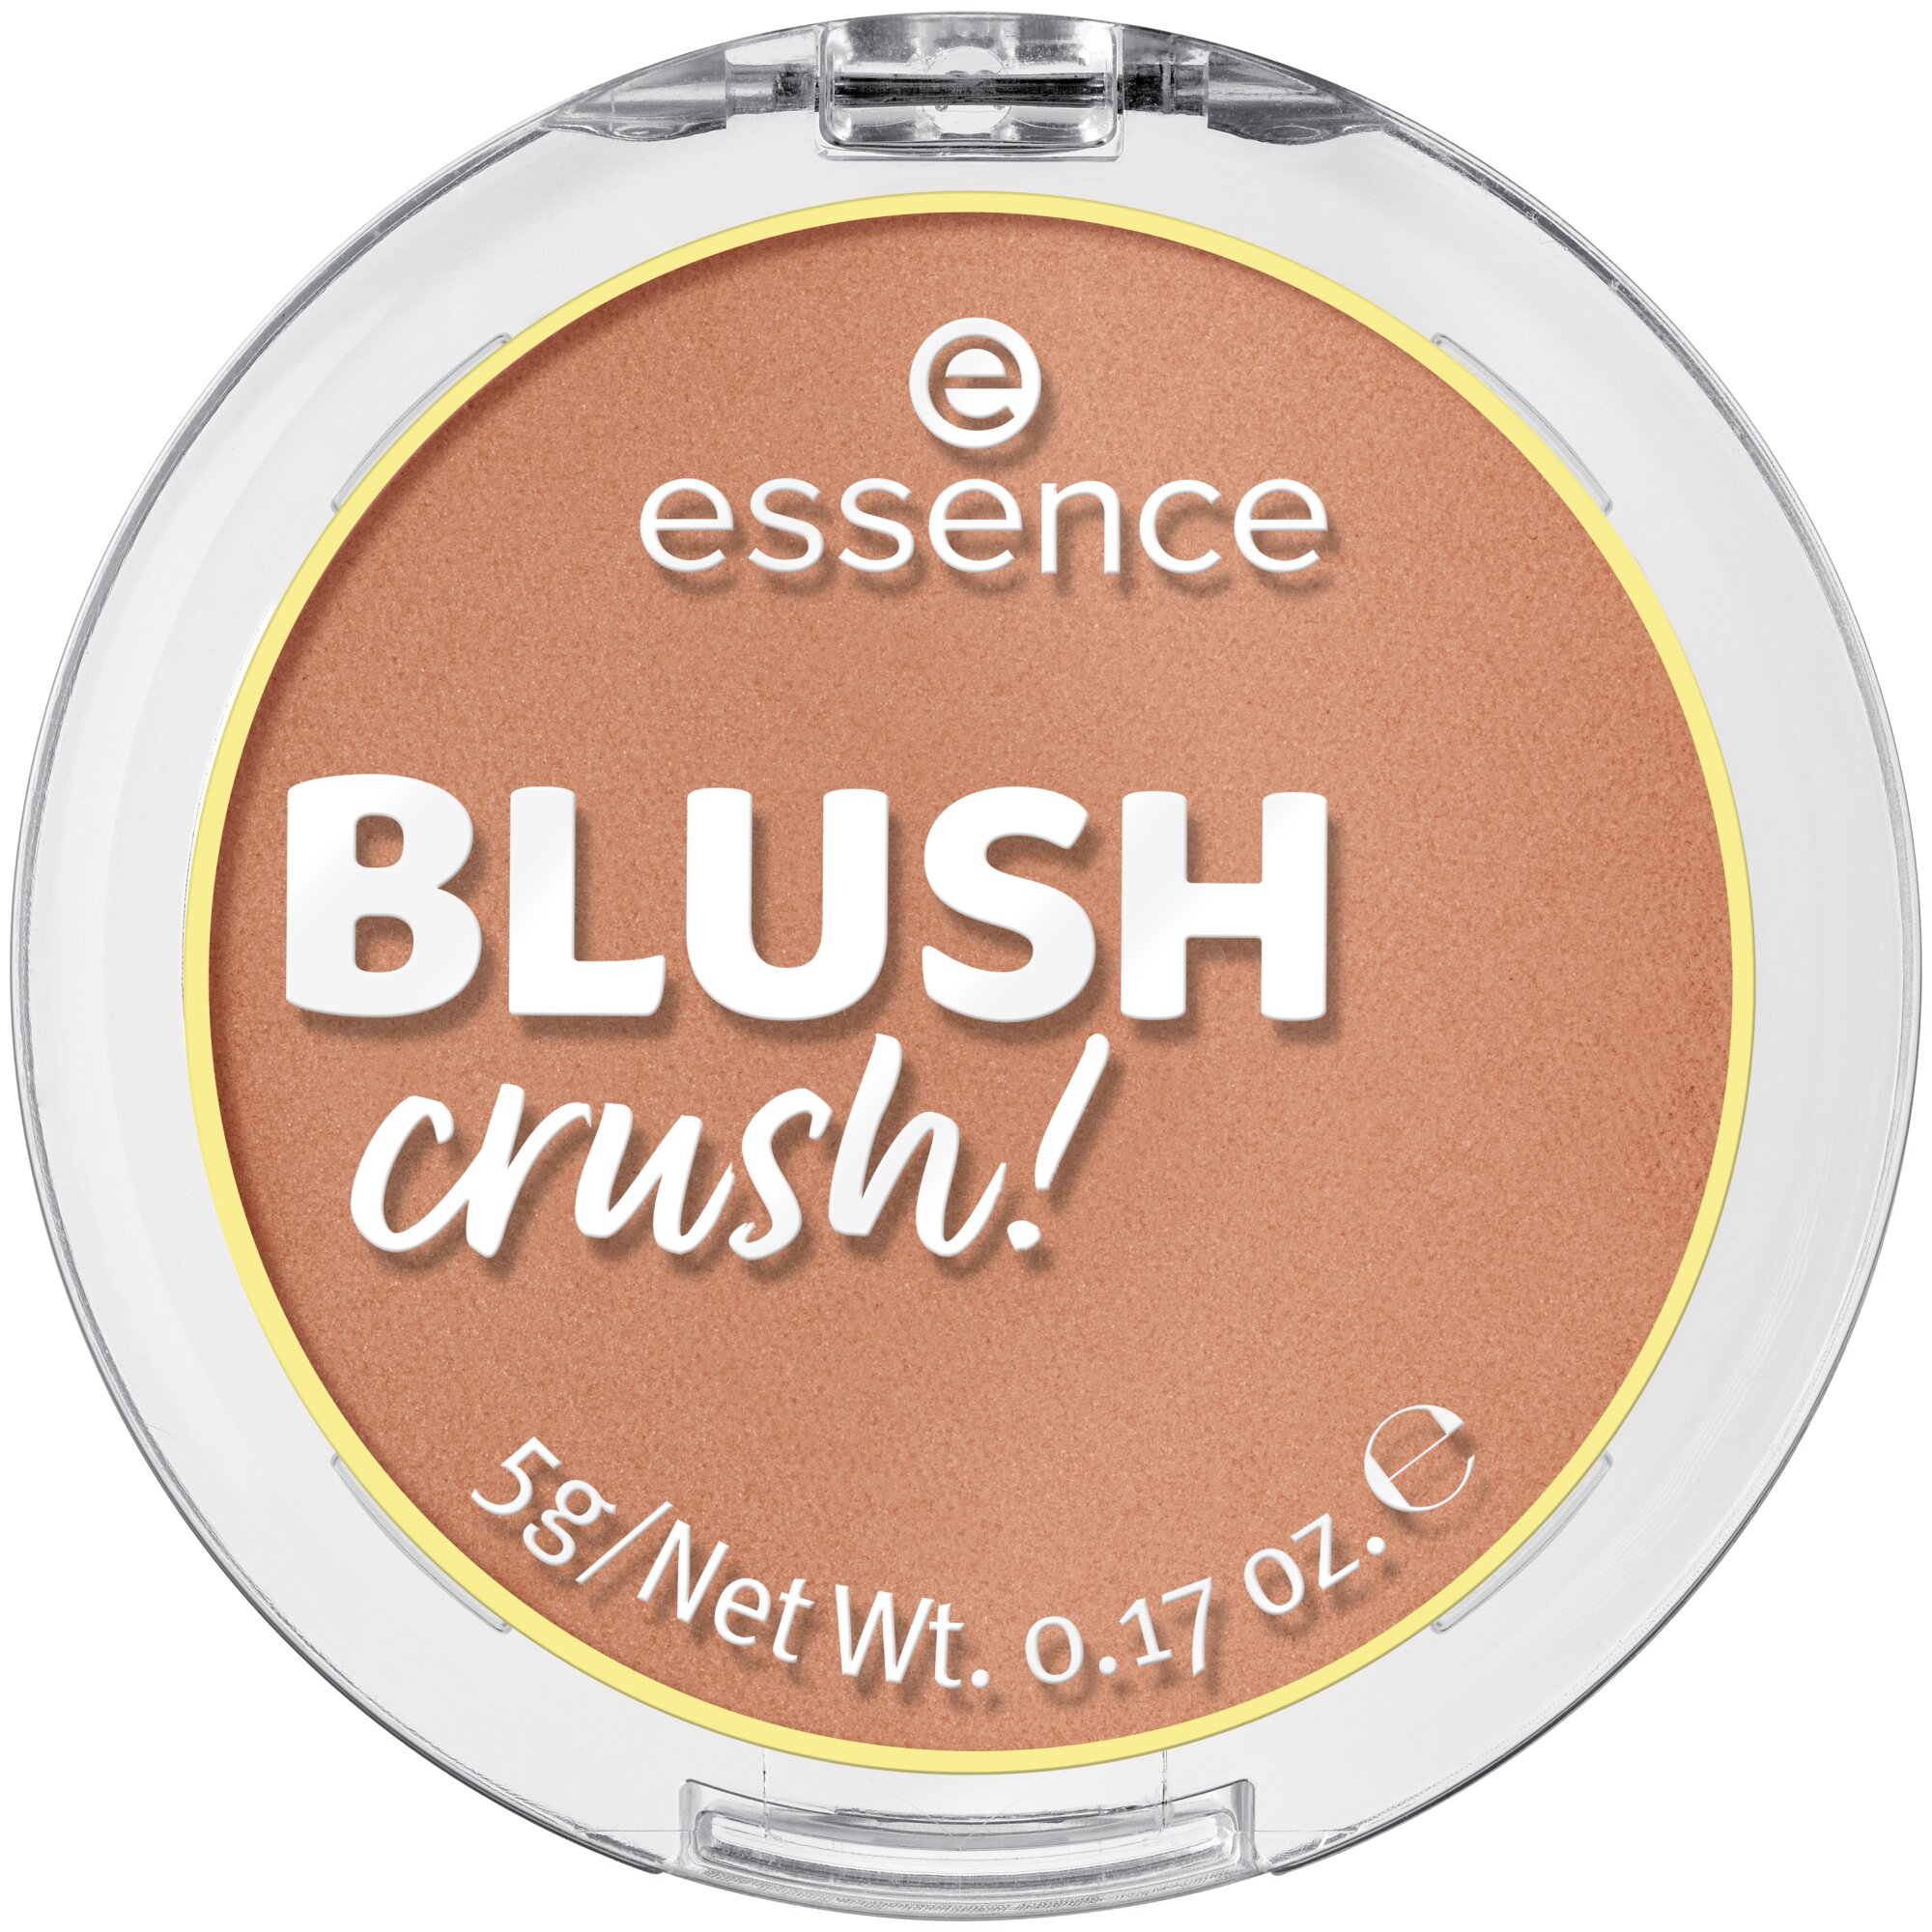 Fard de obraz Blush crush!, 10 - Caramel Latte, 5 g, Essence